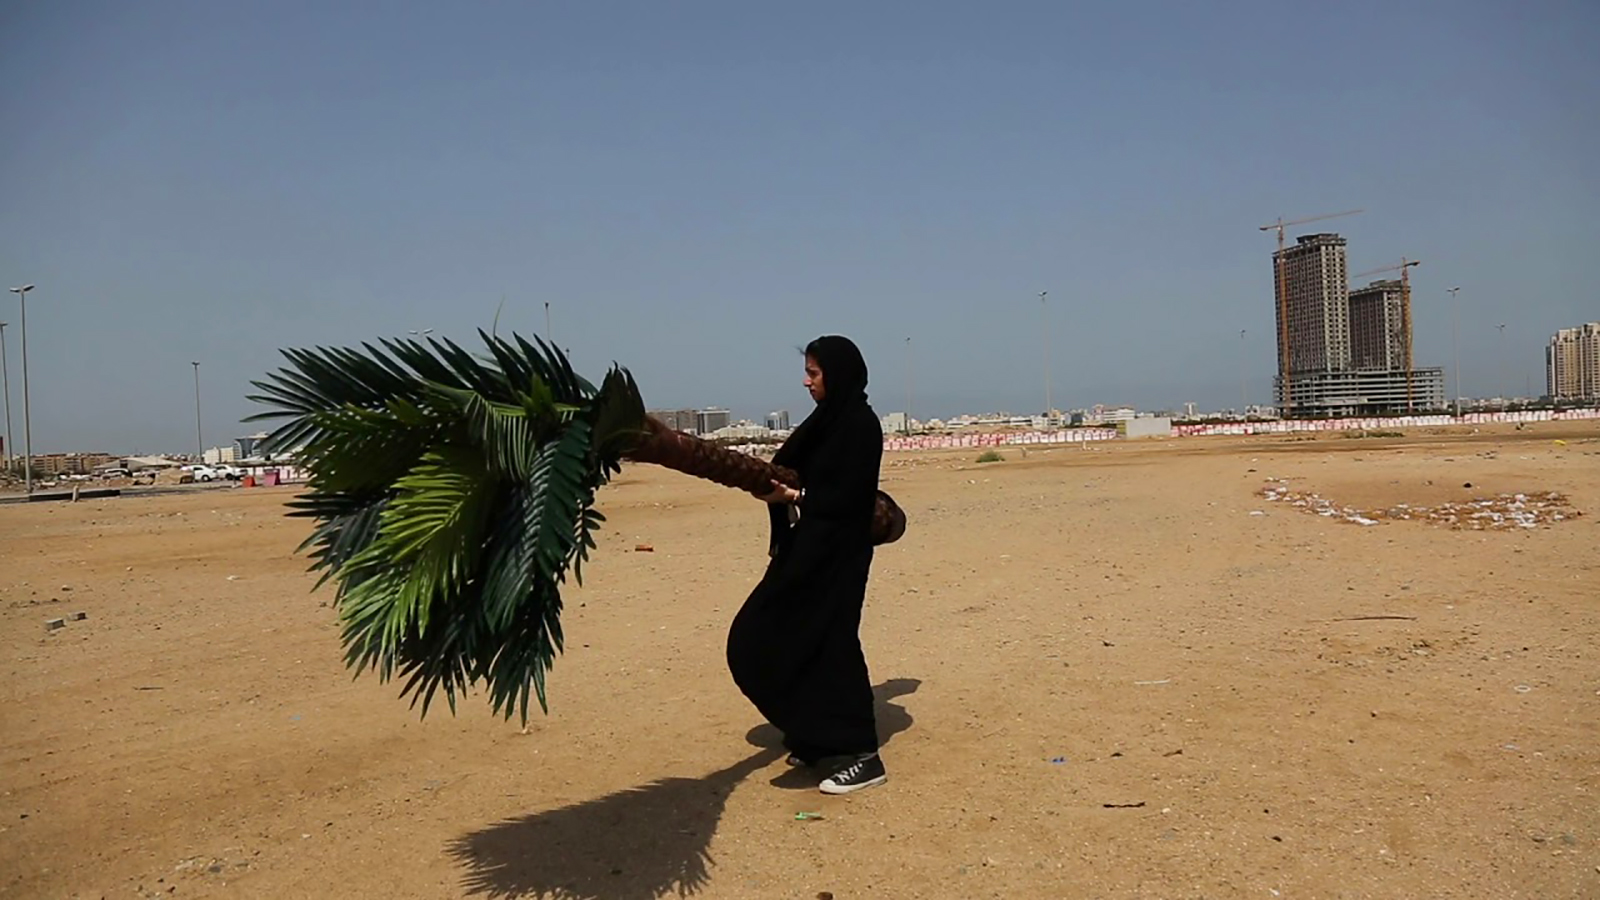 Woman walks in a desert landscape carrying a palm tree